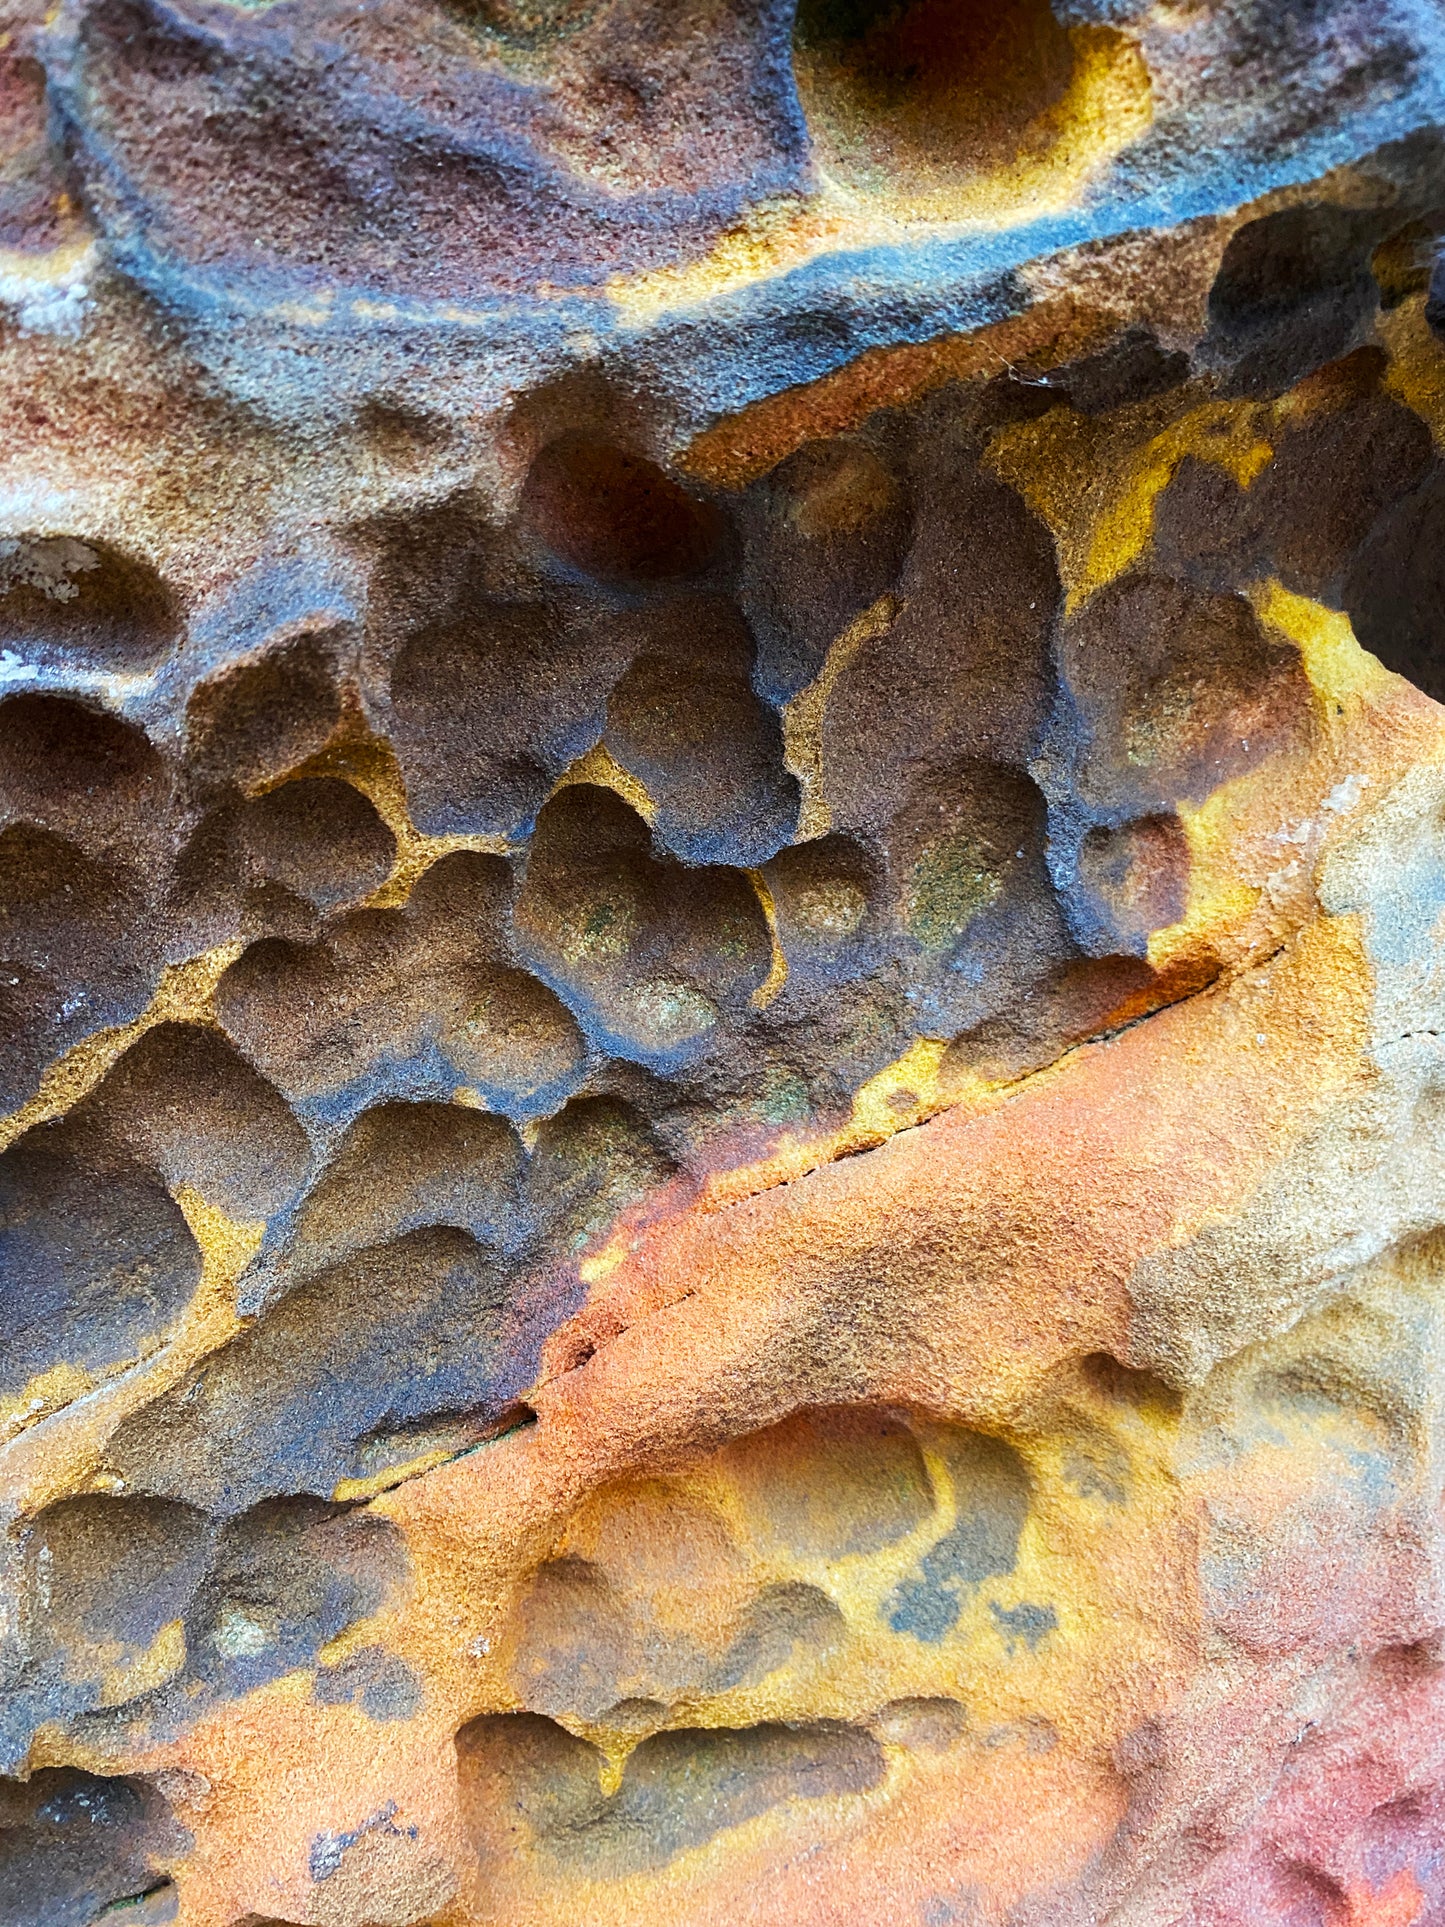 Colorful World, Nature Wall Art, Rock Ledges Photograph